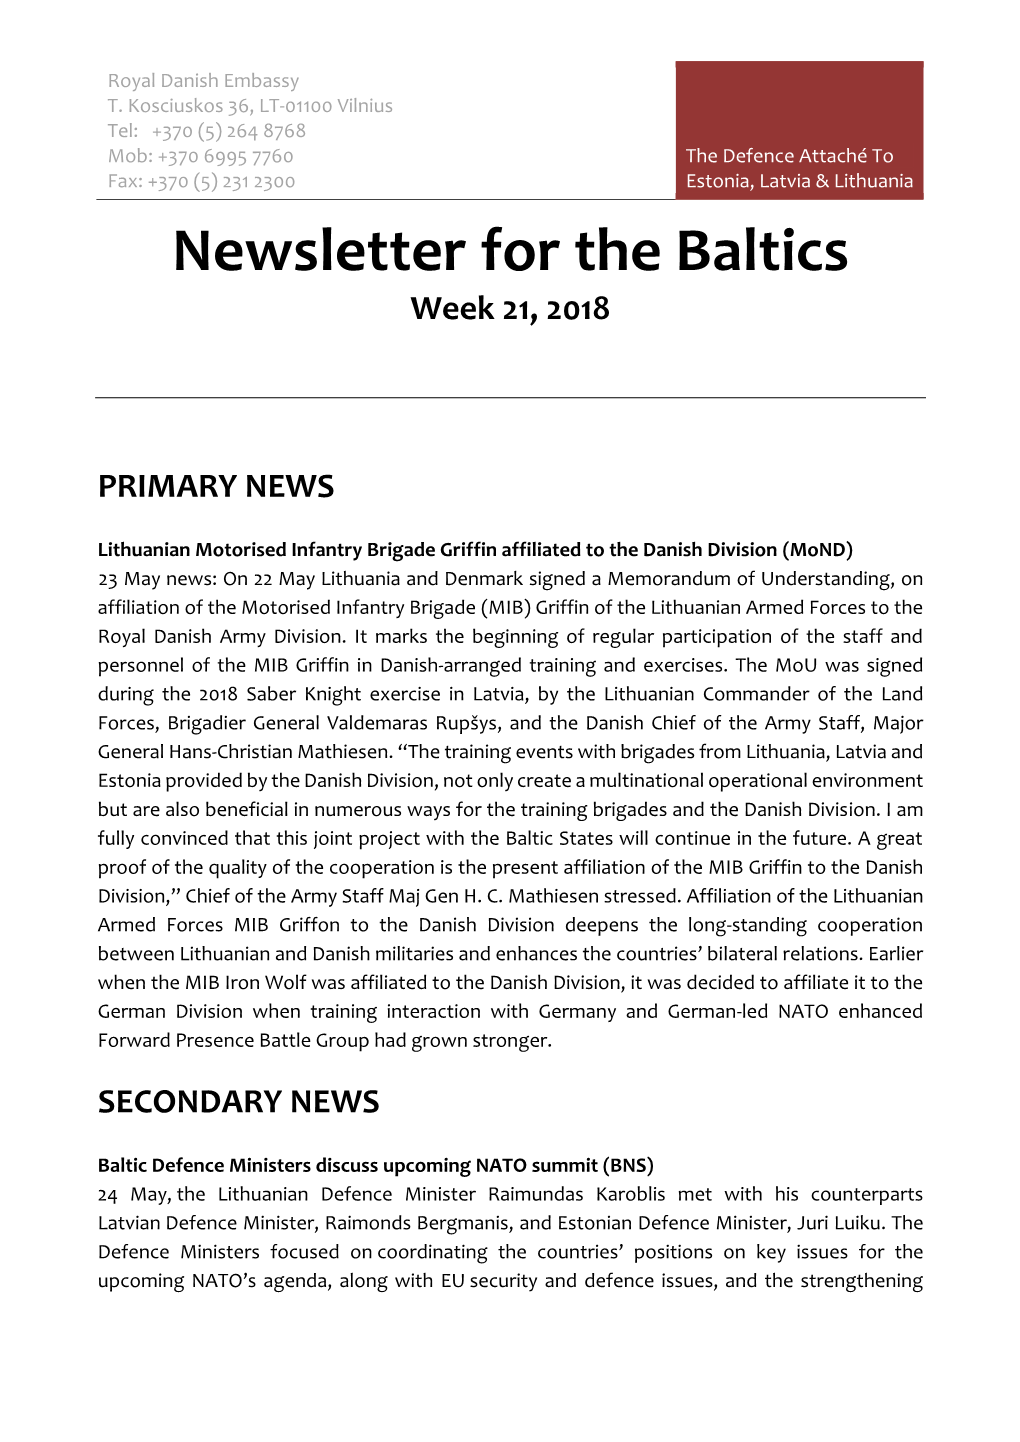 Newsletter for the Baltics Week 21, 2018